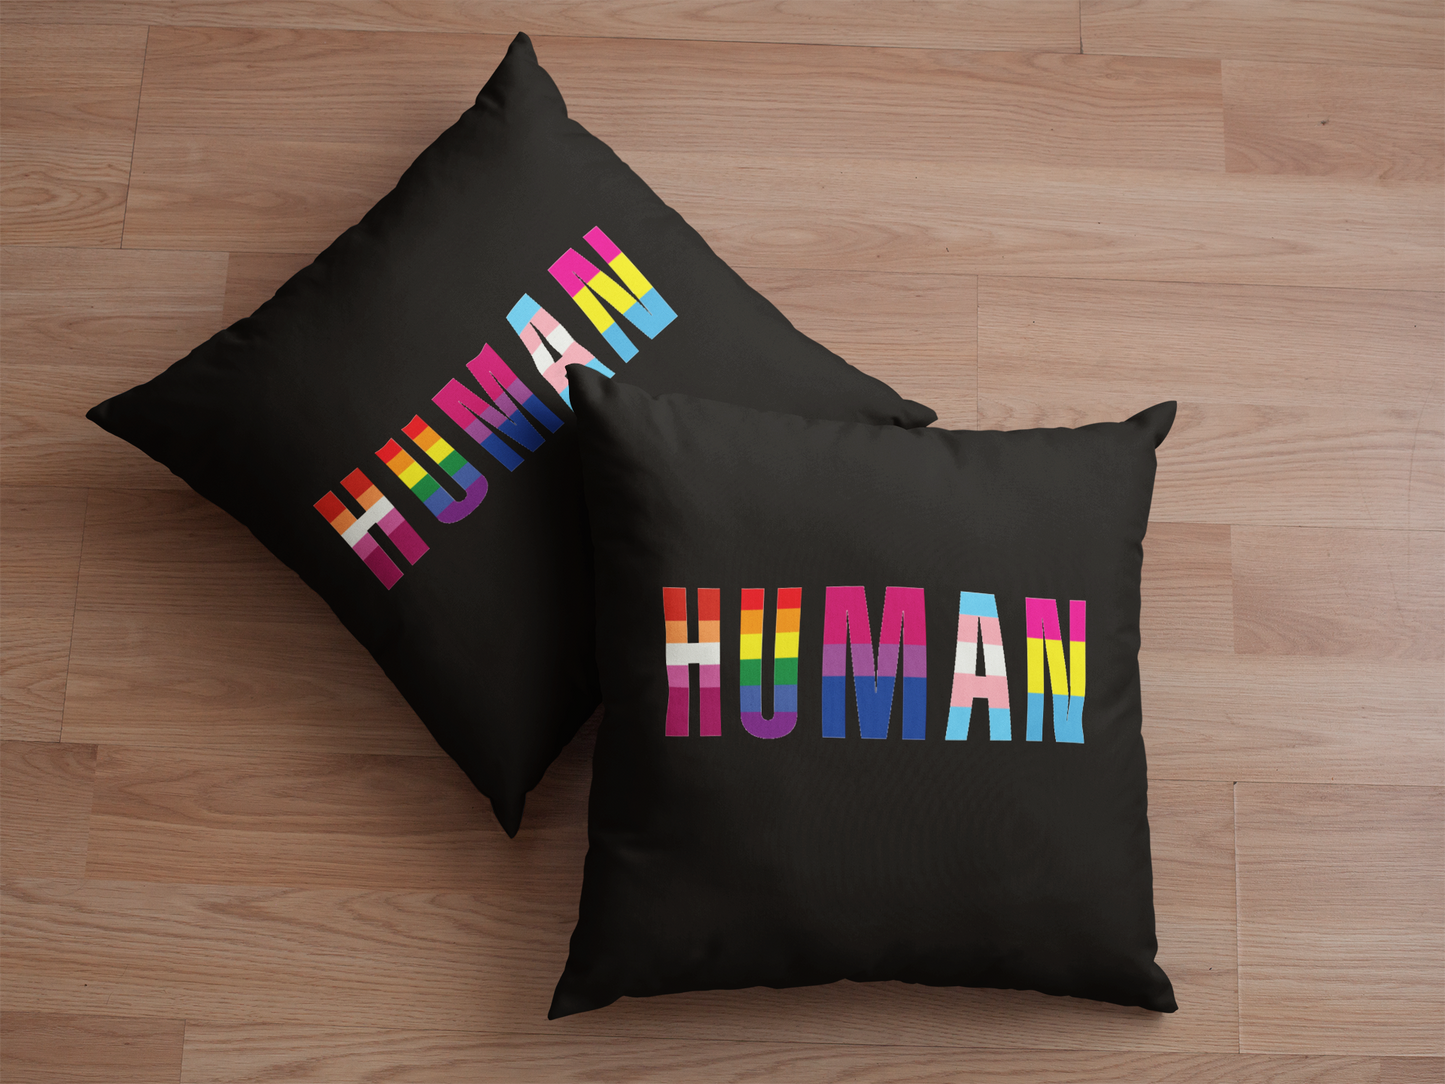 Cushion Cover - HUMAN (Pride)